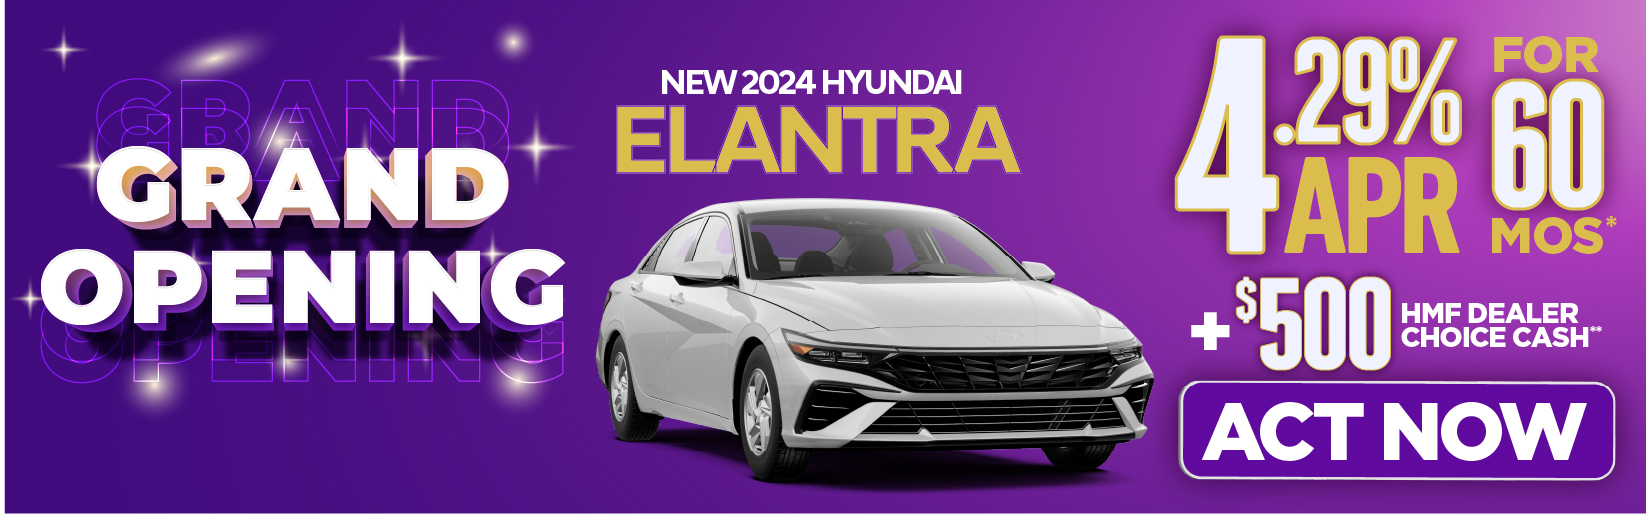 New 2024 Hyundai Elantra - 4.29% APR for 60 months. Plus $500 HMF Dealer Choice Cash - Act Now